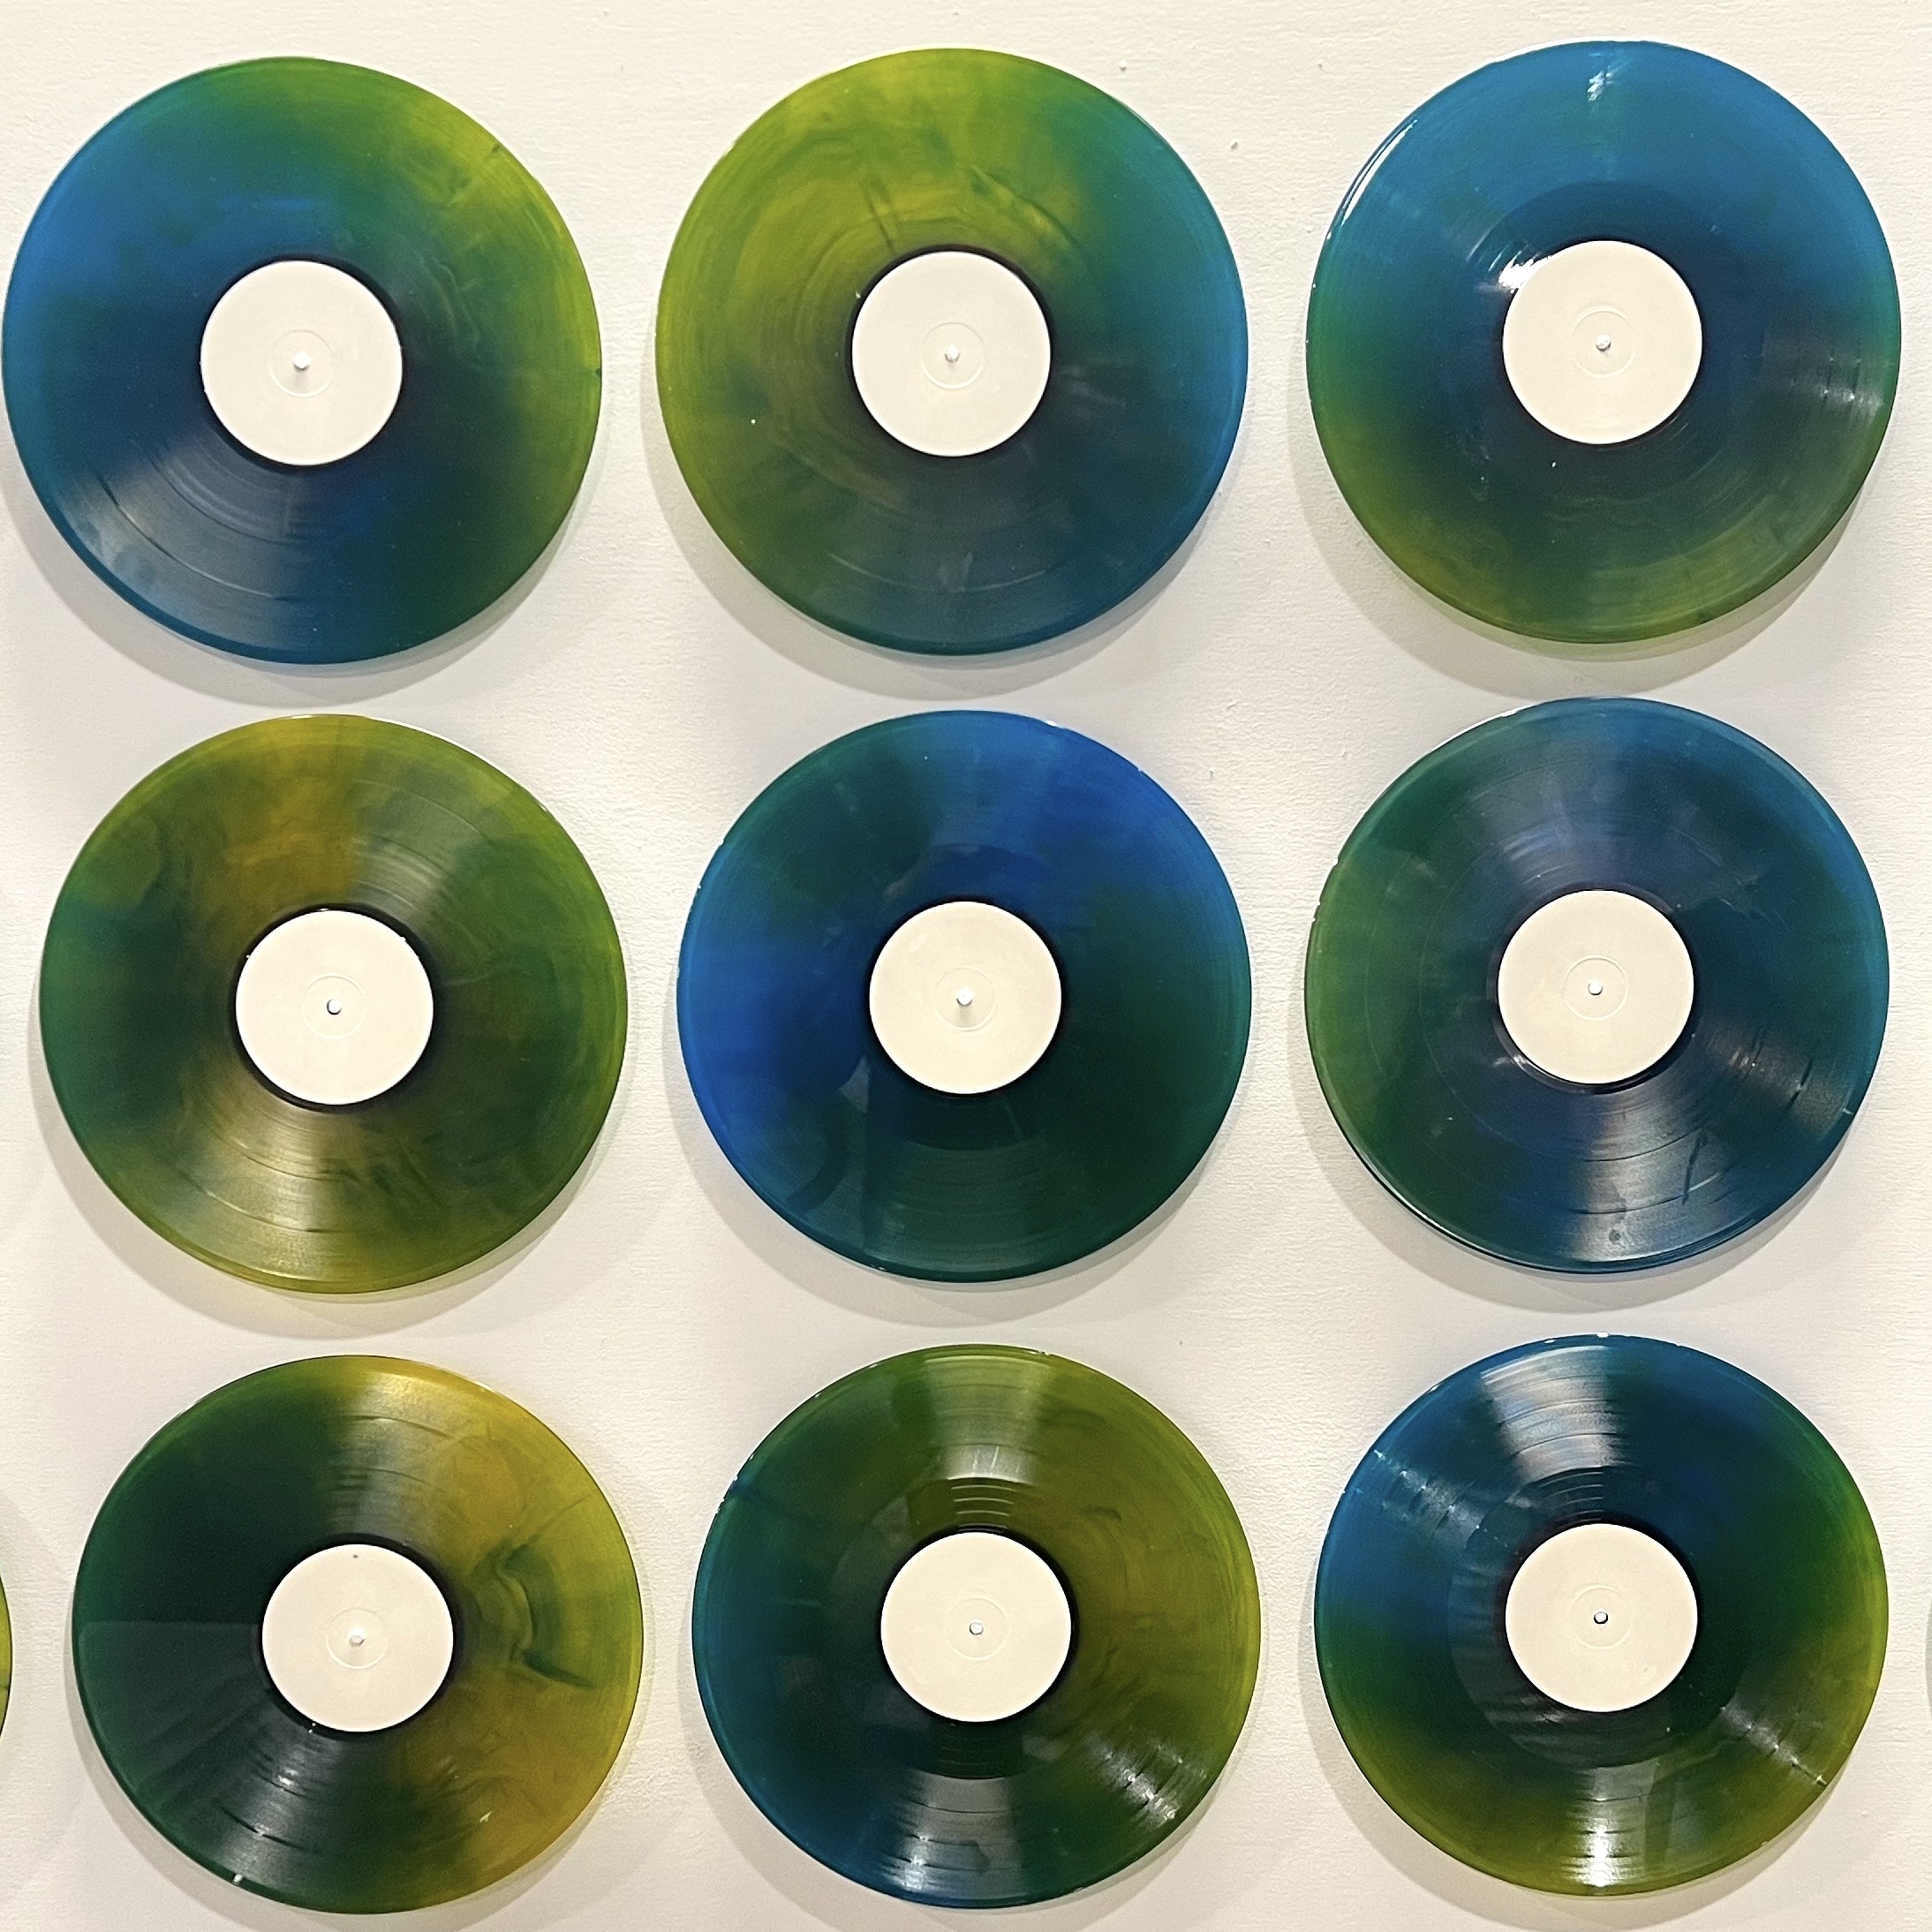 Green Vinyl Records - Find Colored Vinyl